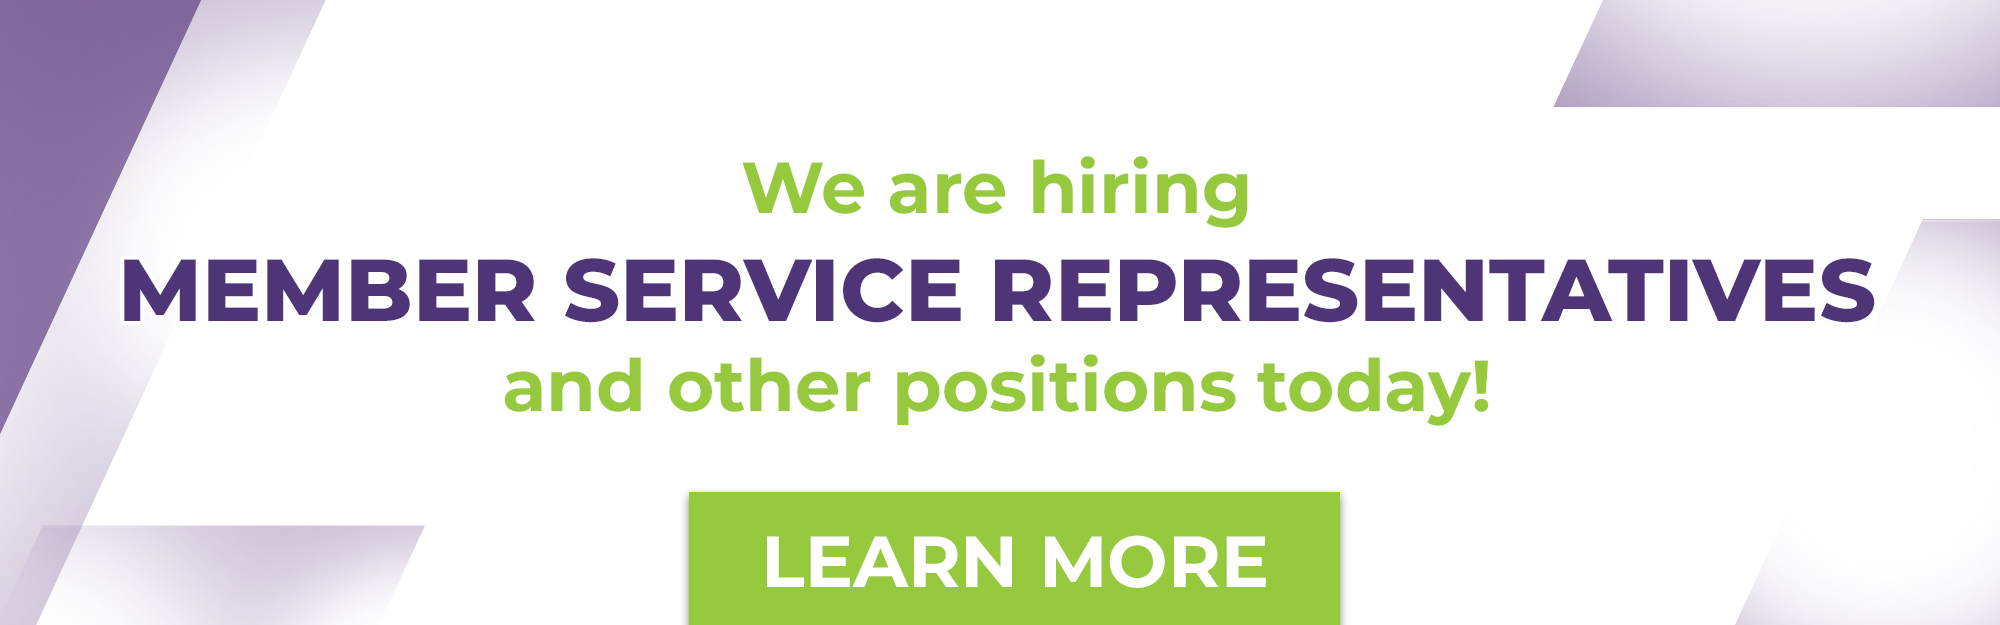 we are hiring service representatives